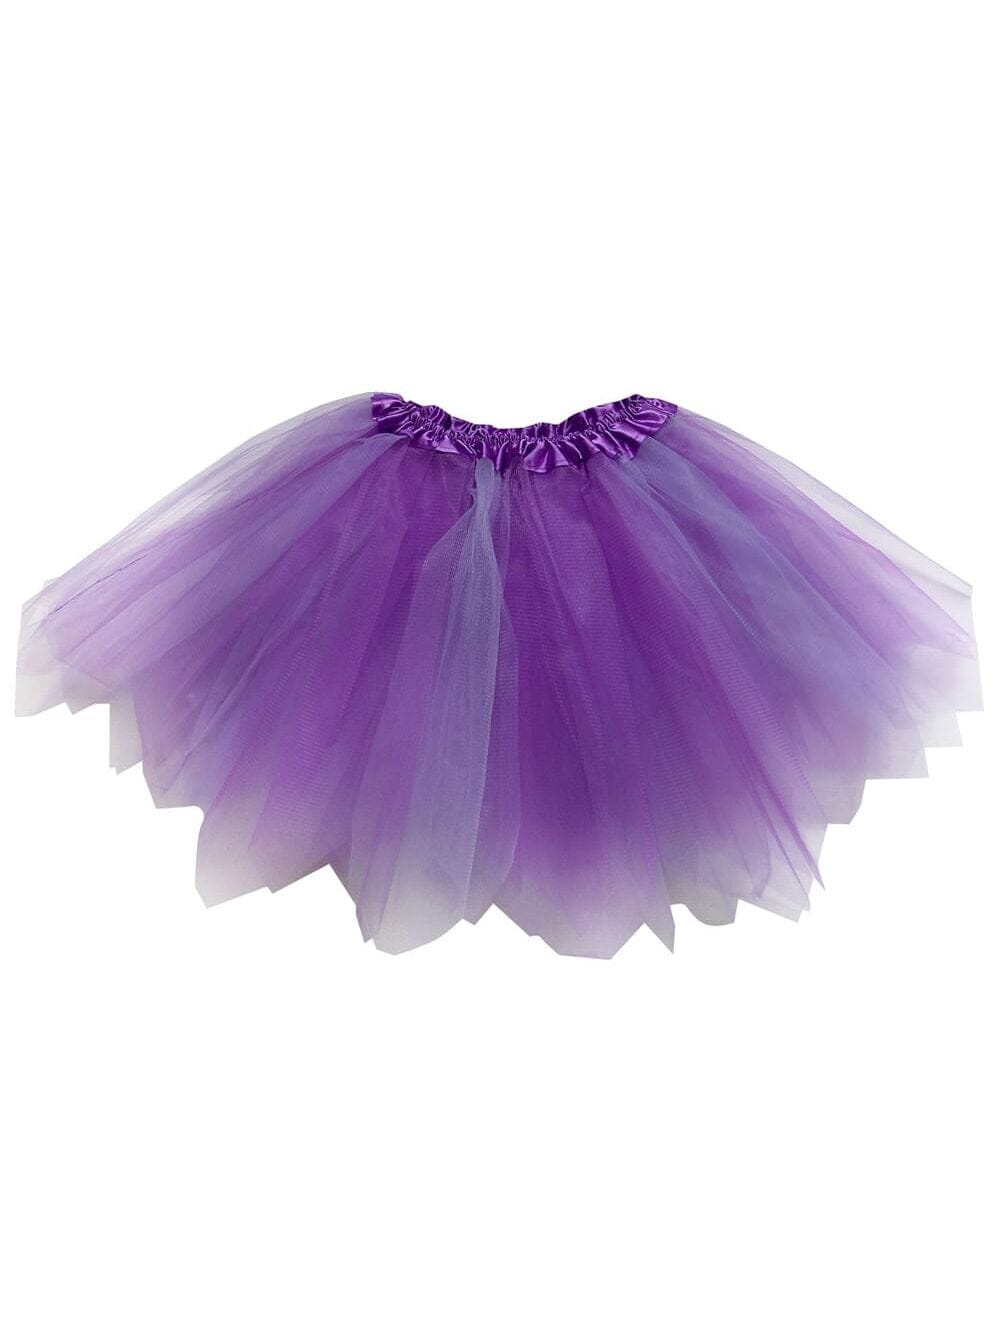 Lavender & Purple Fairy Costume Pixie Tutu Skirt for Kids, Adults, Plus - Sydney So Sweet